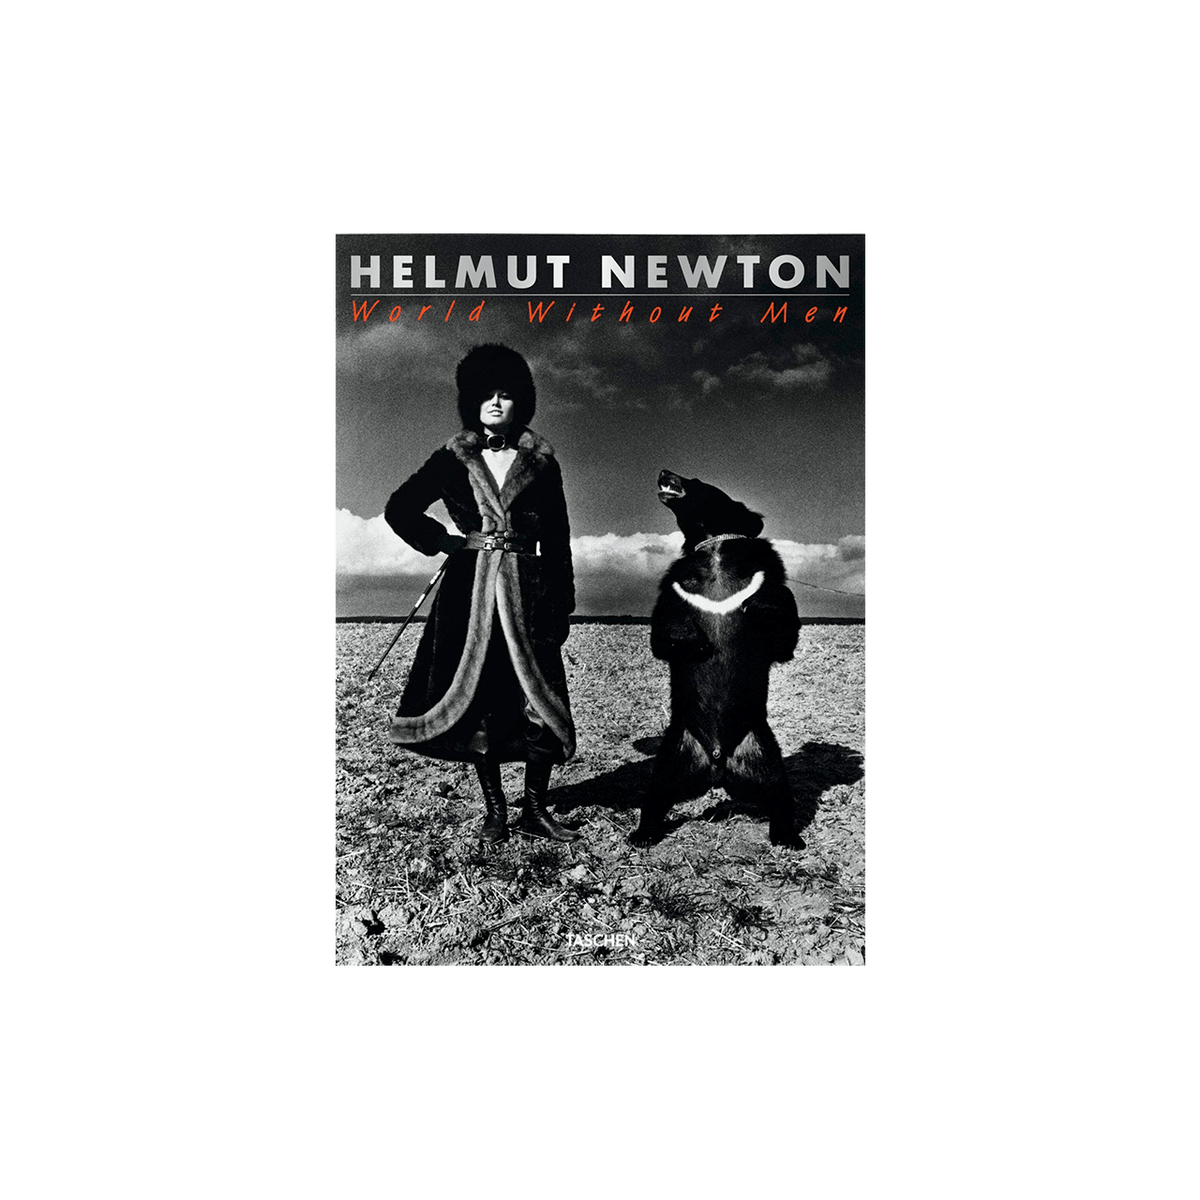 Helmut Newton - World without men